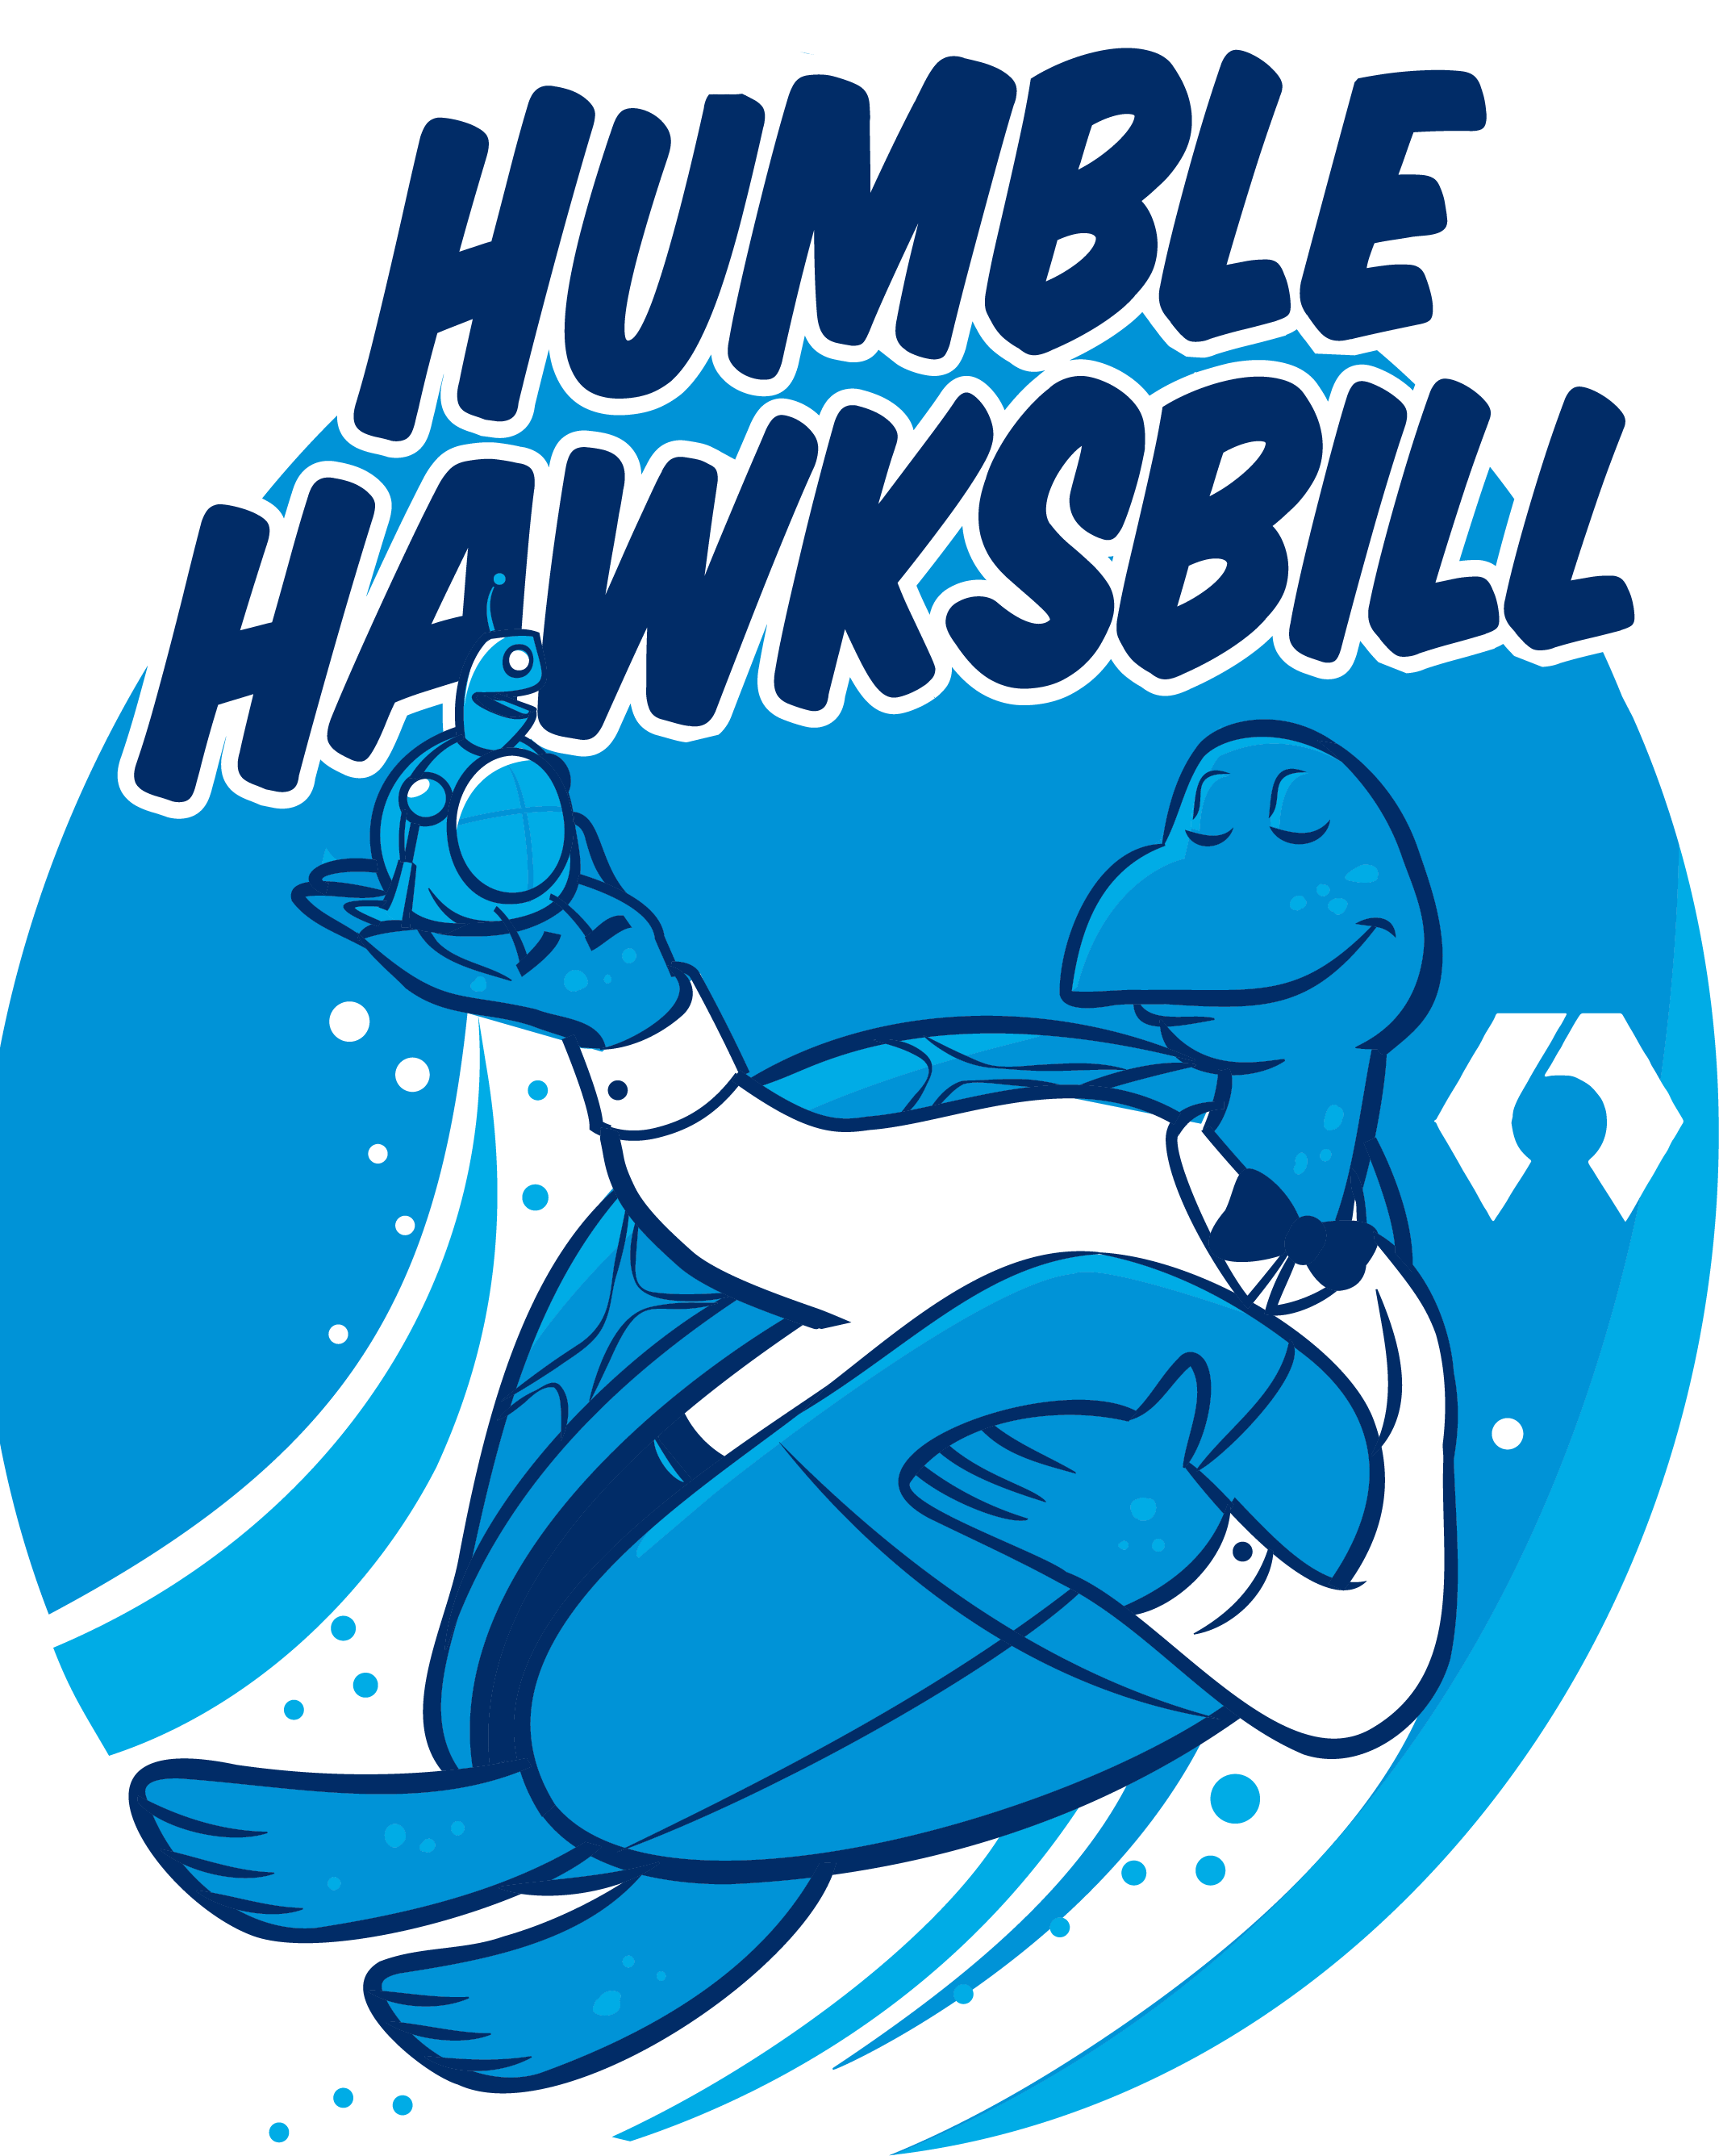 ROS 2 Humble Hawksbill logo